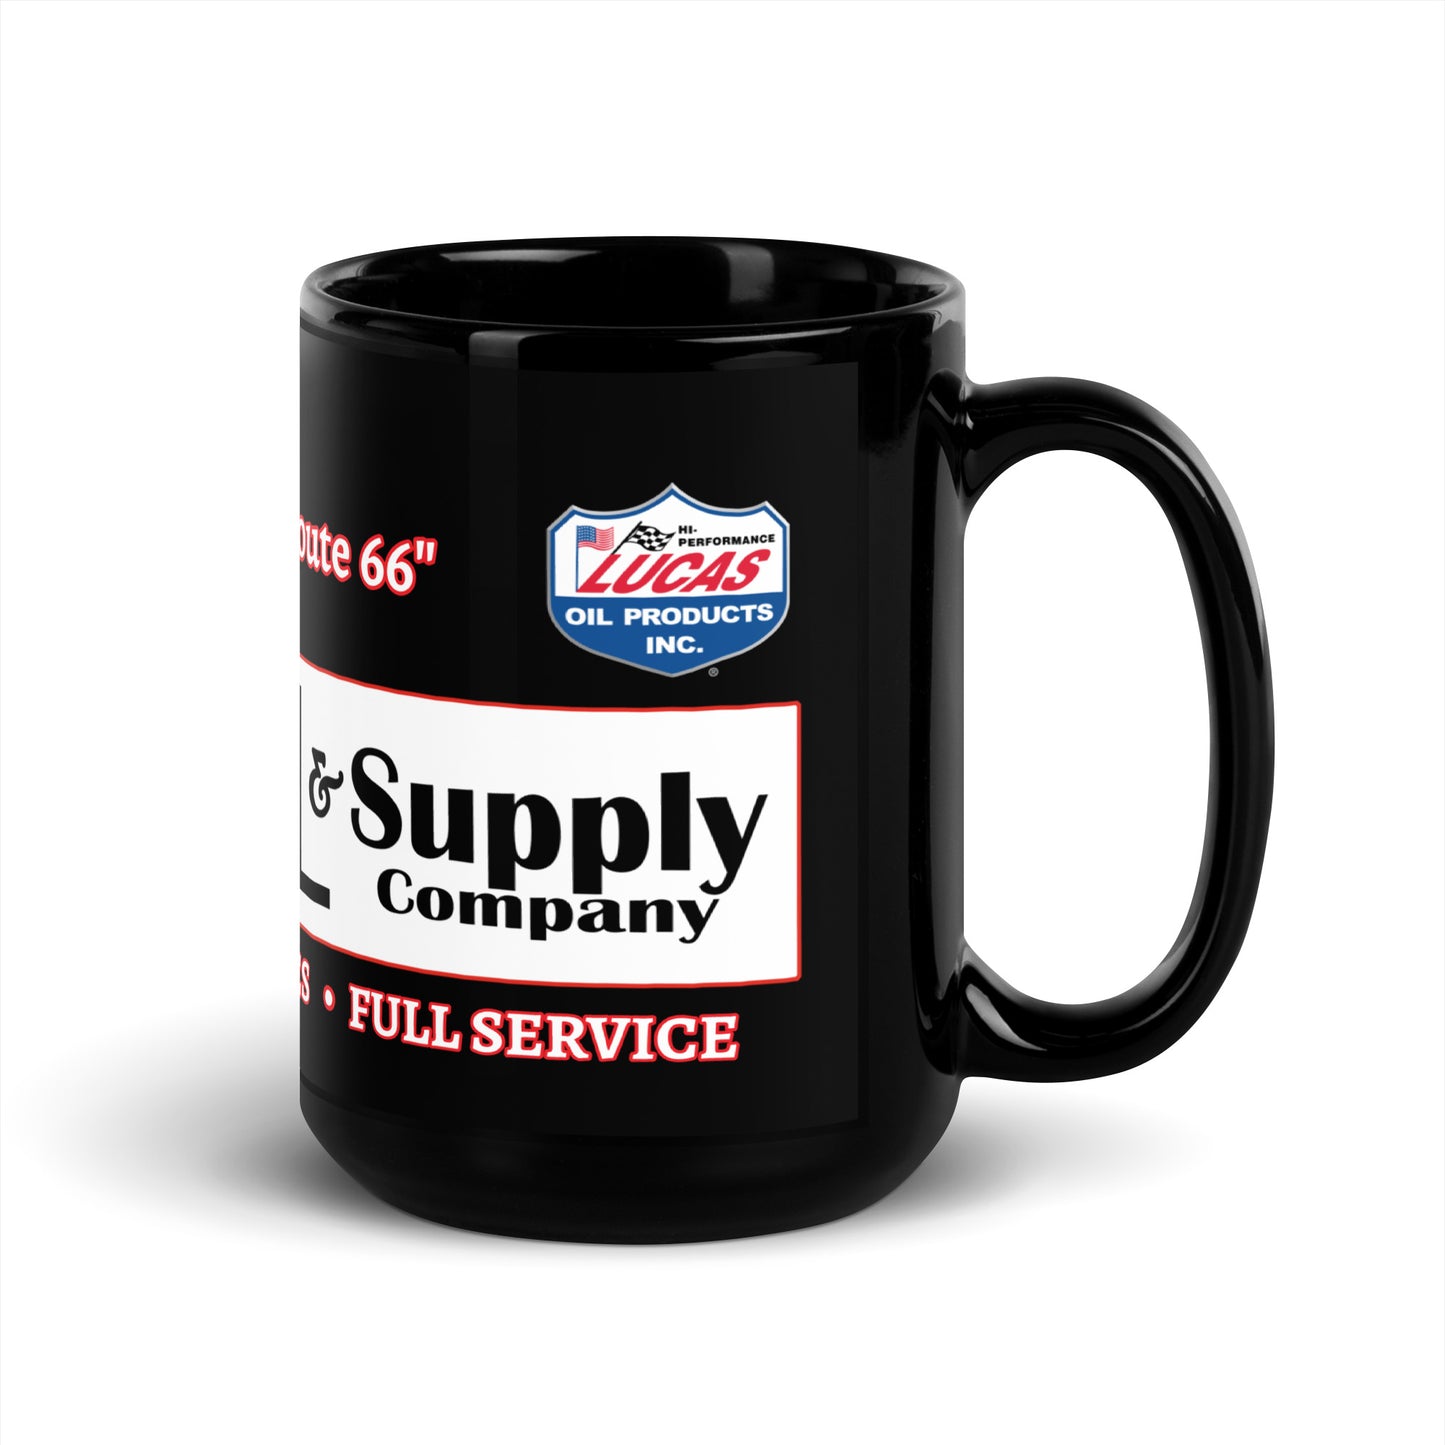 66 Oil & Supply Co. Coffee Mug